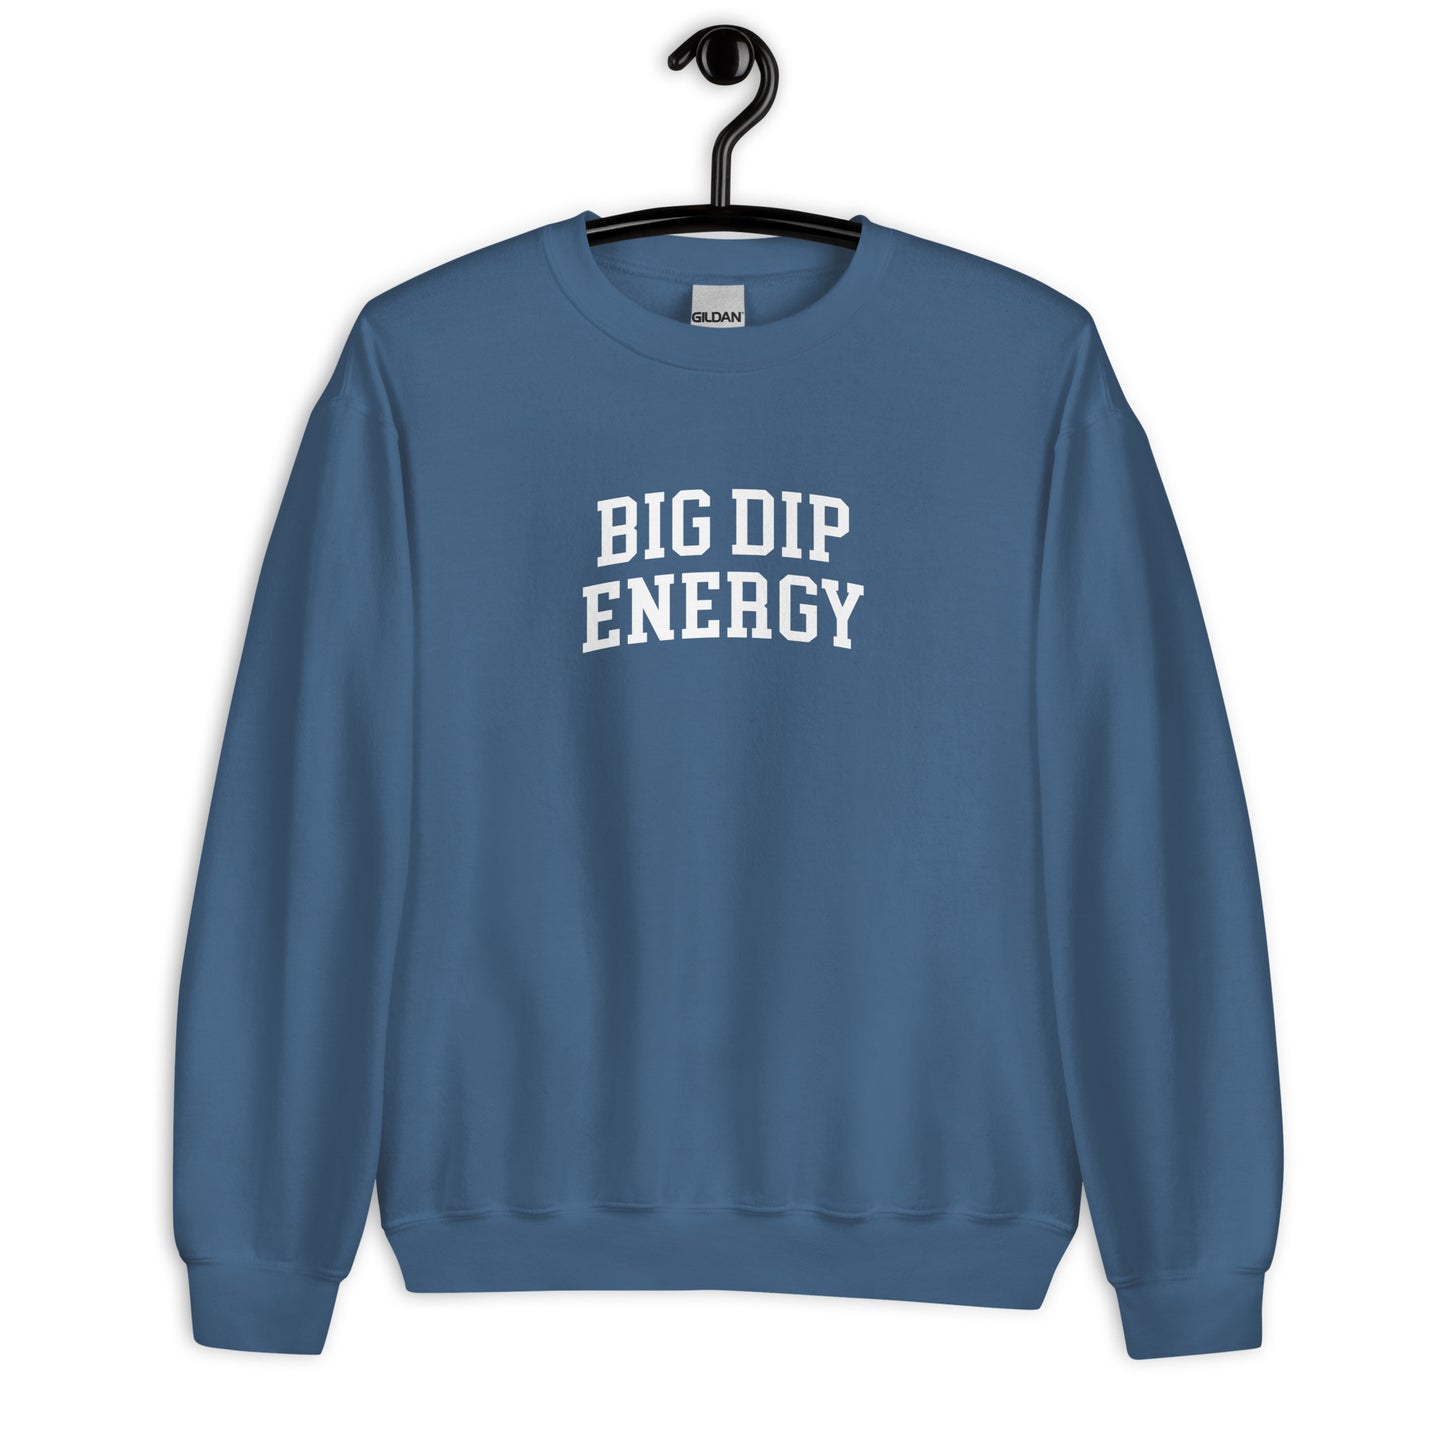 Big Dip Energy Sweatshirt - Arched Font